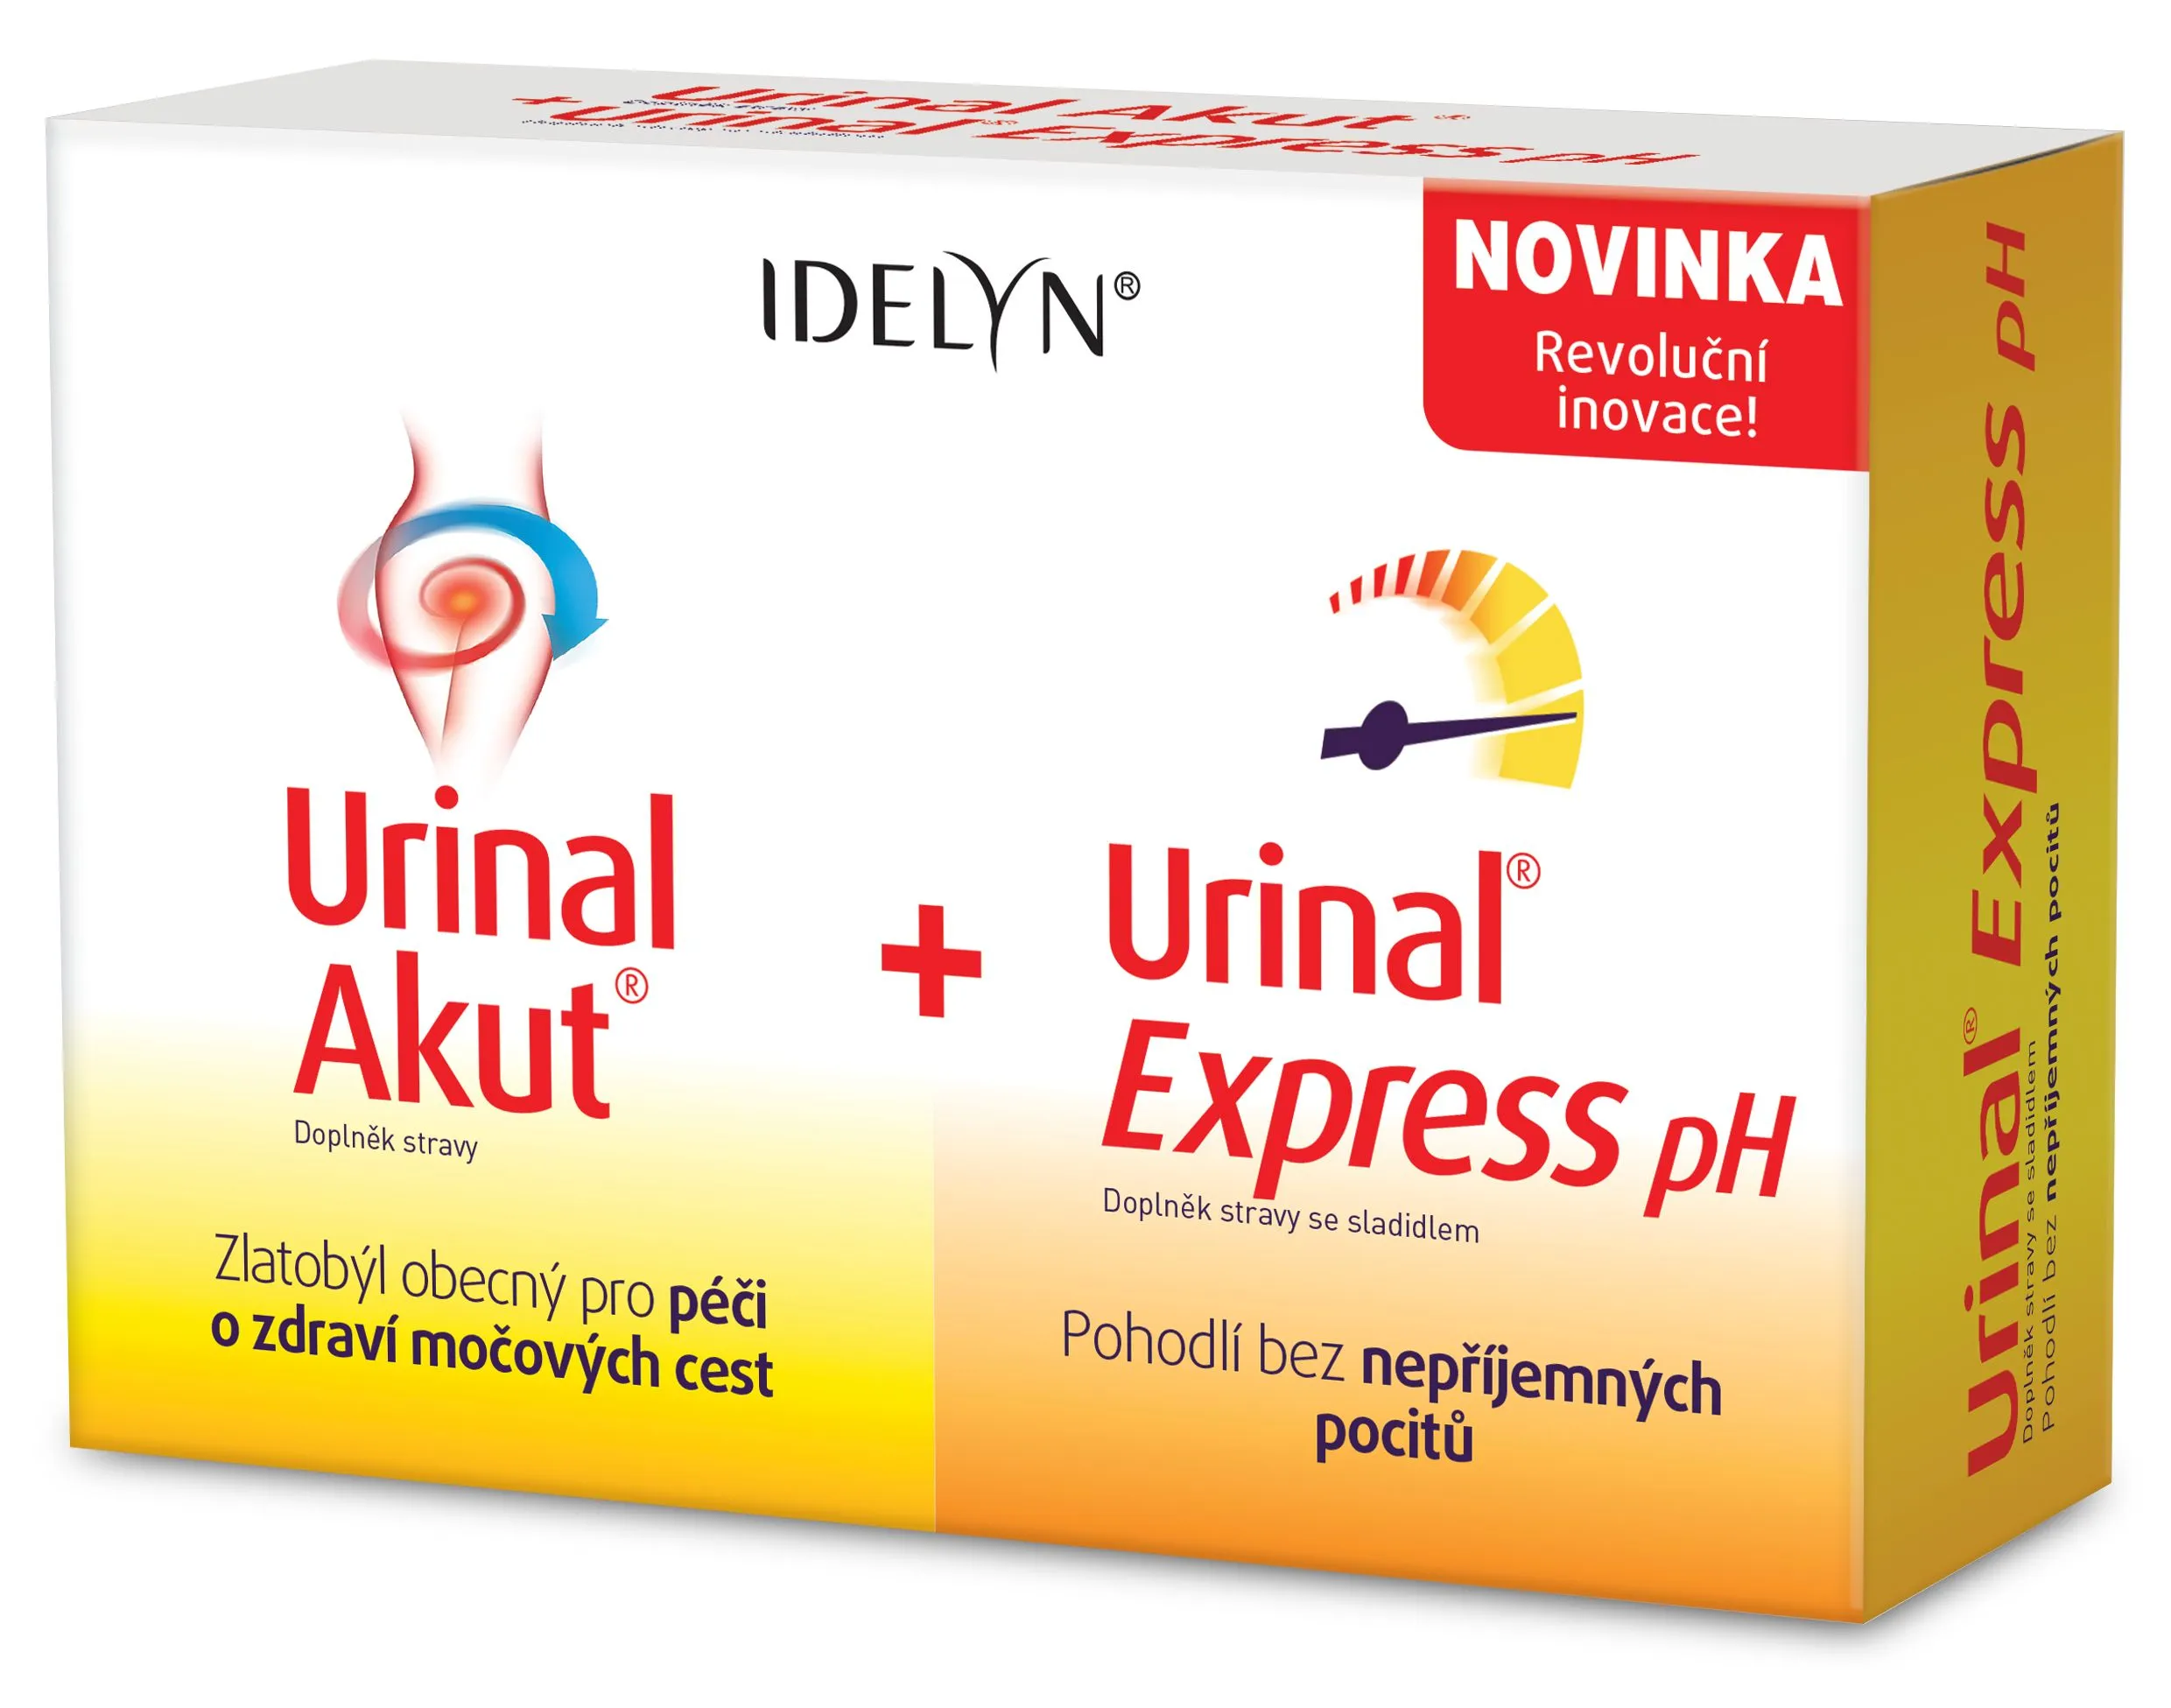 Idelyn Urinal Akut + Urinal Express pH 10 tablet + 6 sáčků